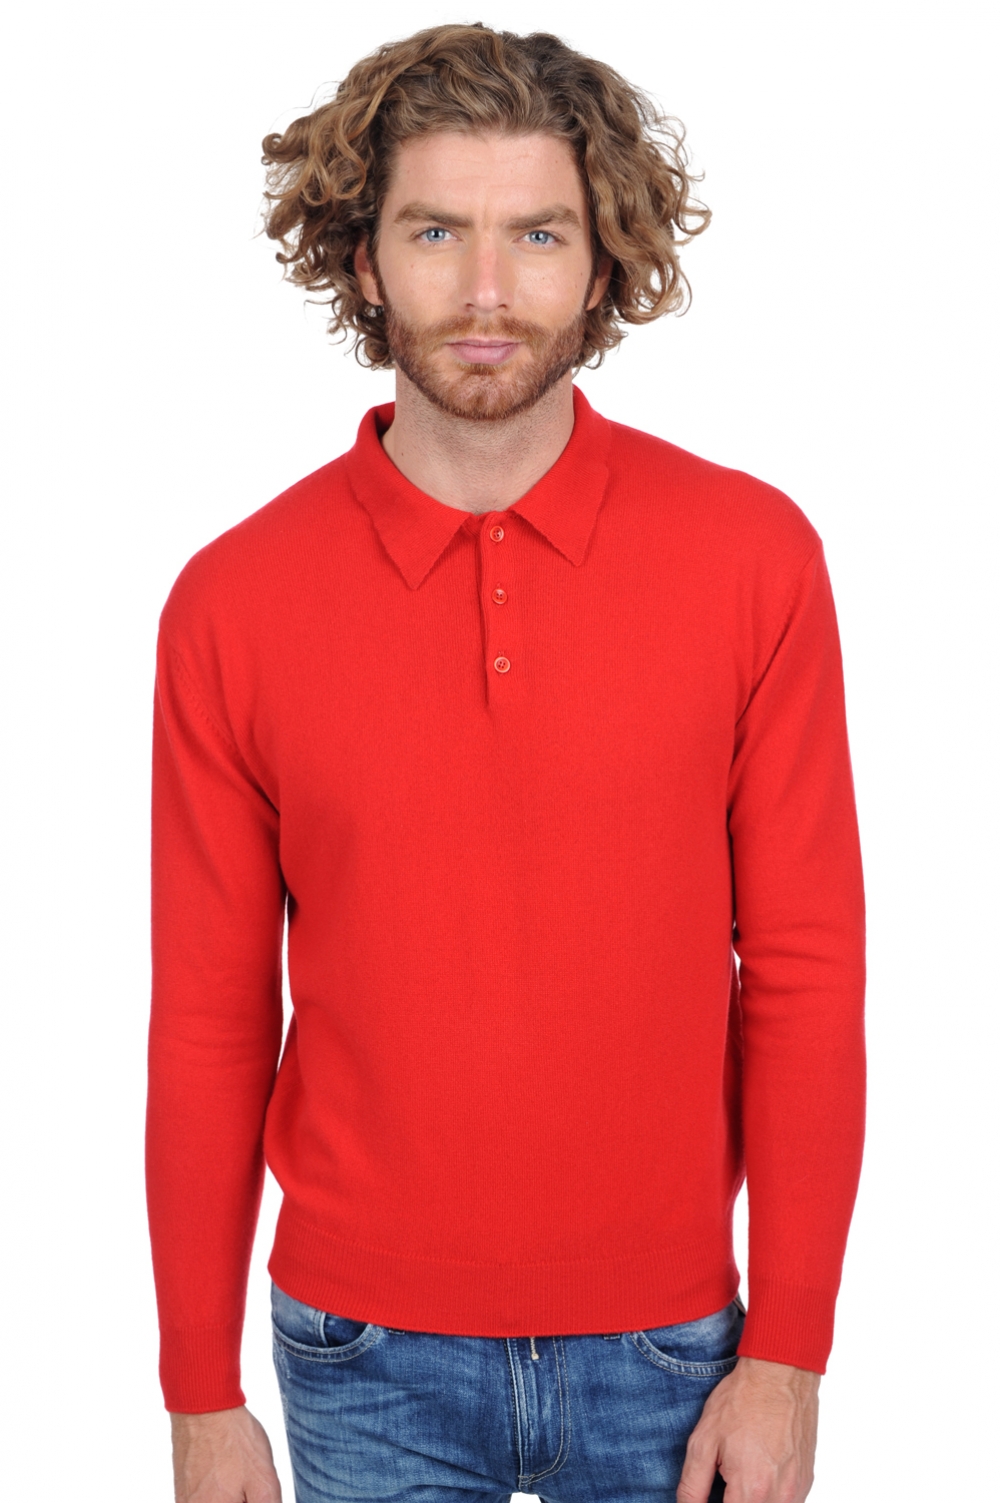 Cachemire pull homme alexandre premium rouge xs